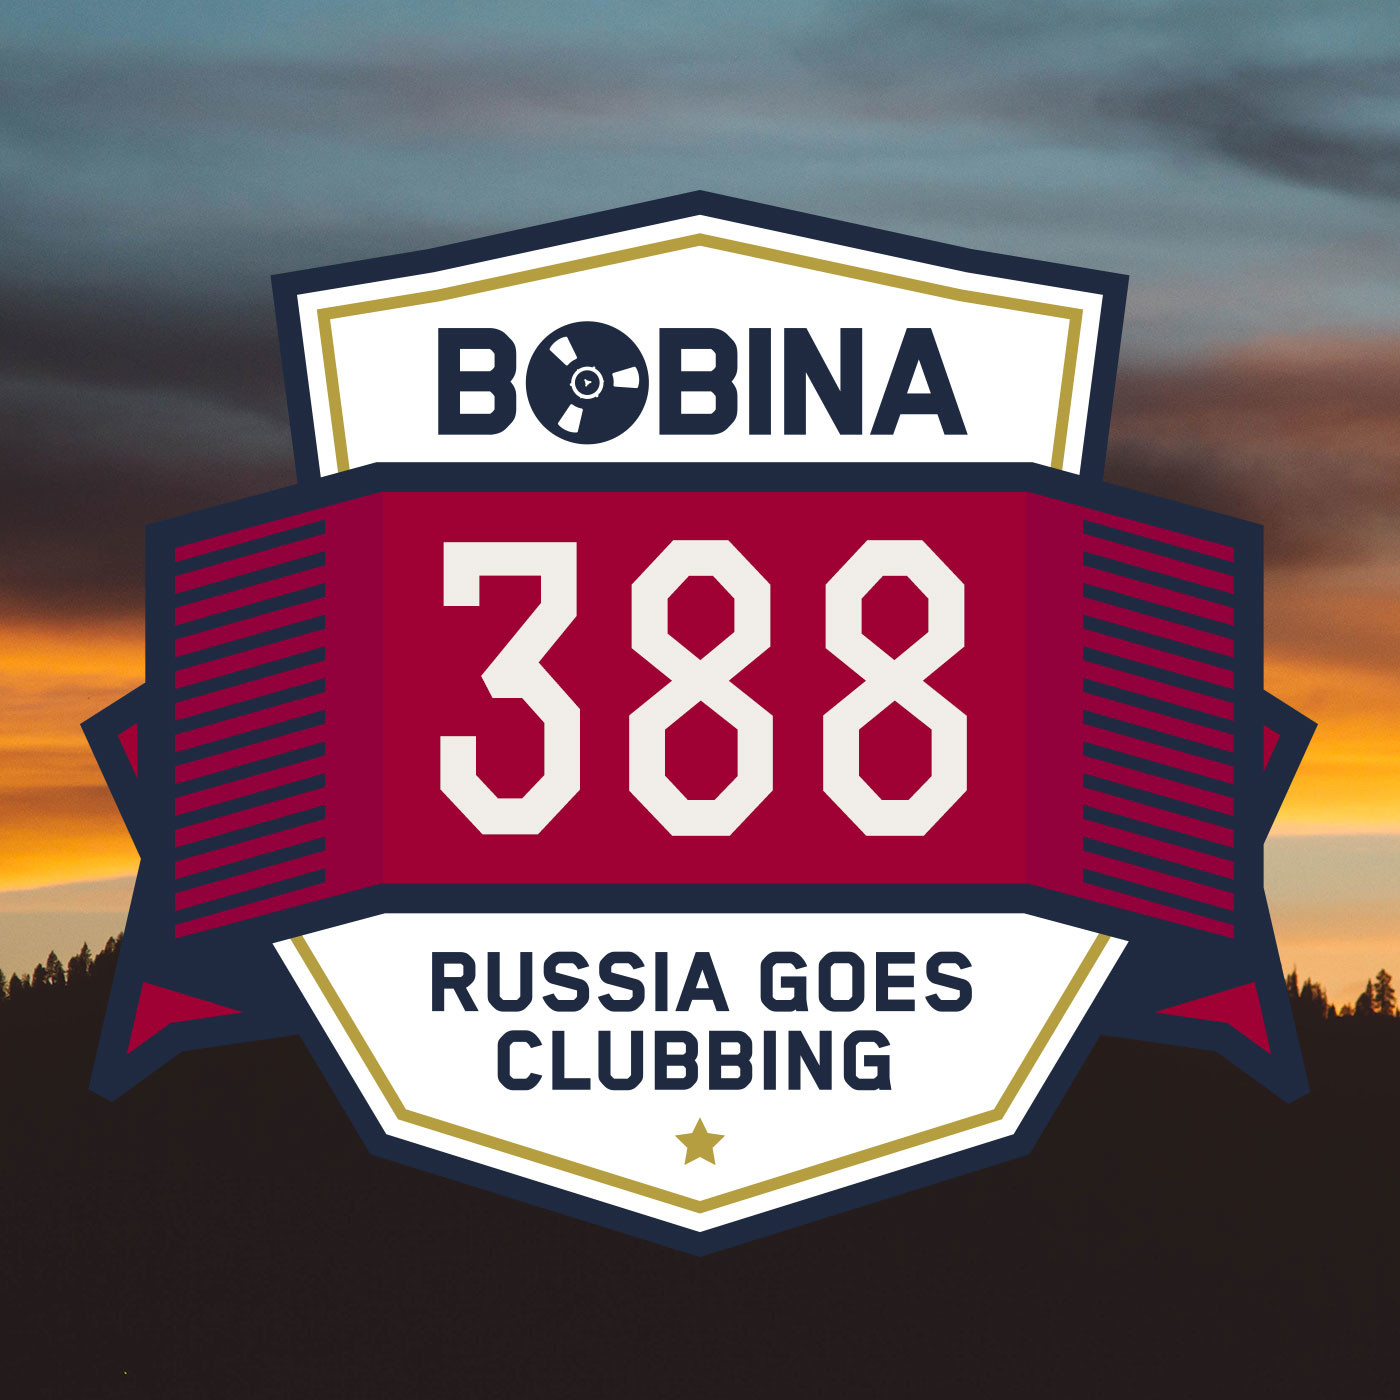 Nr. 388 Russia Goes Clubbing (Rus)